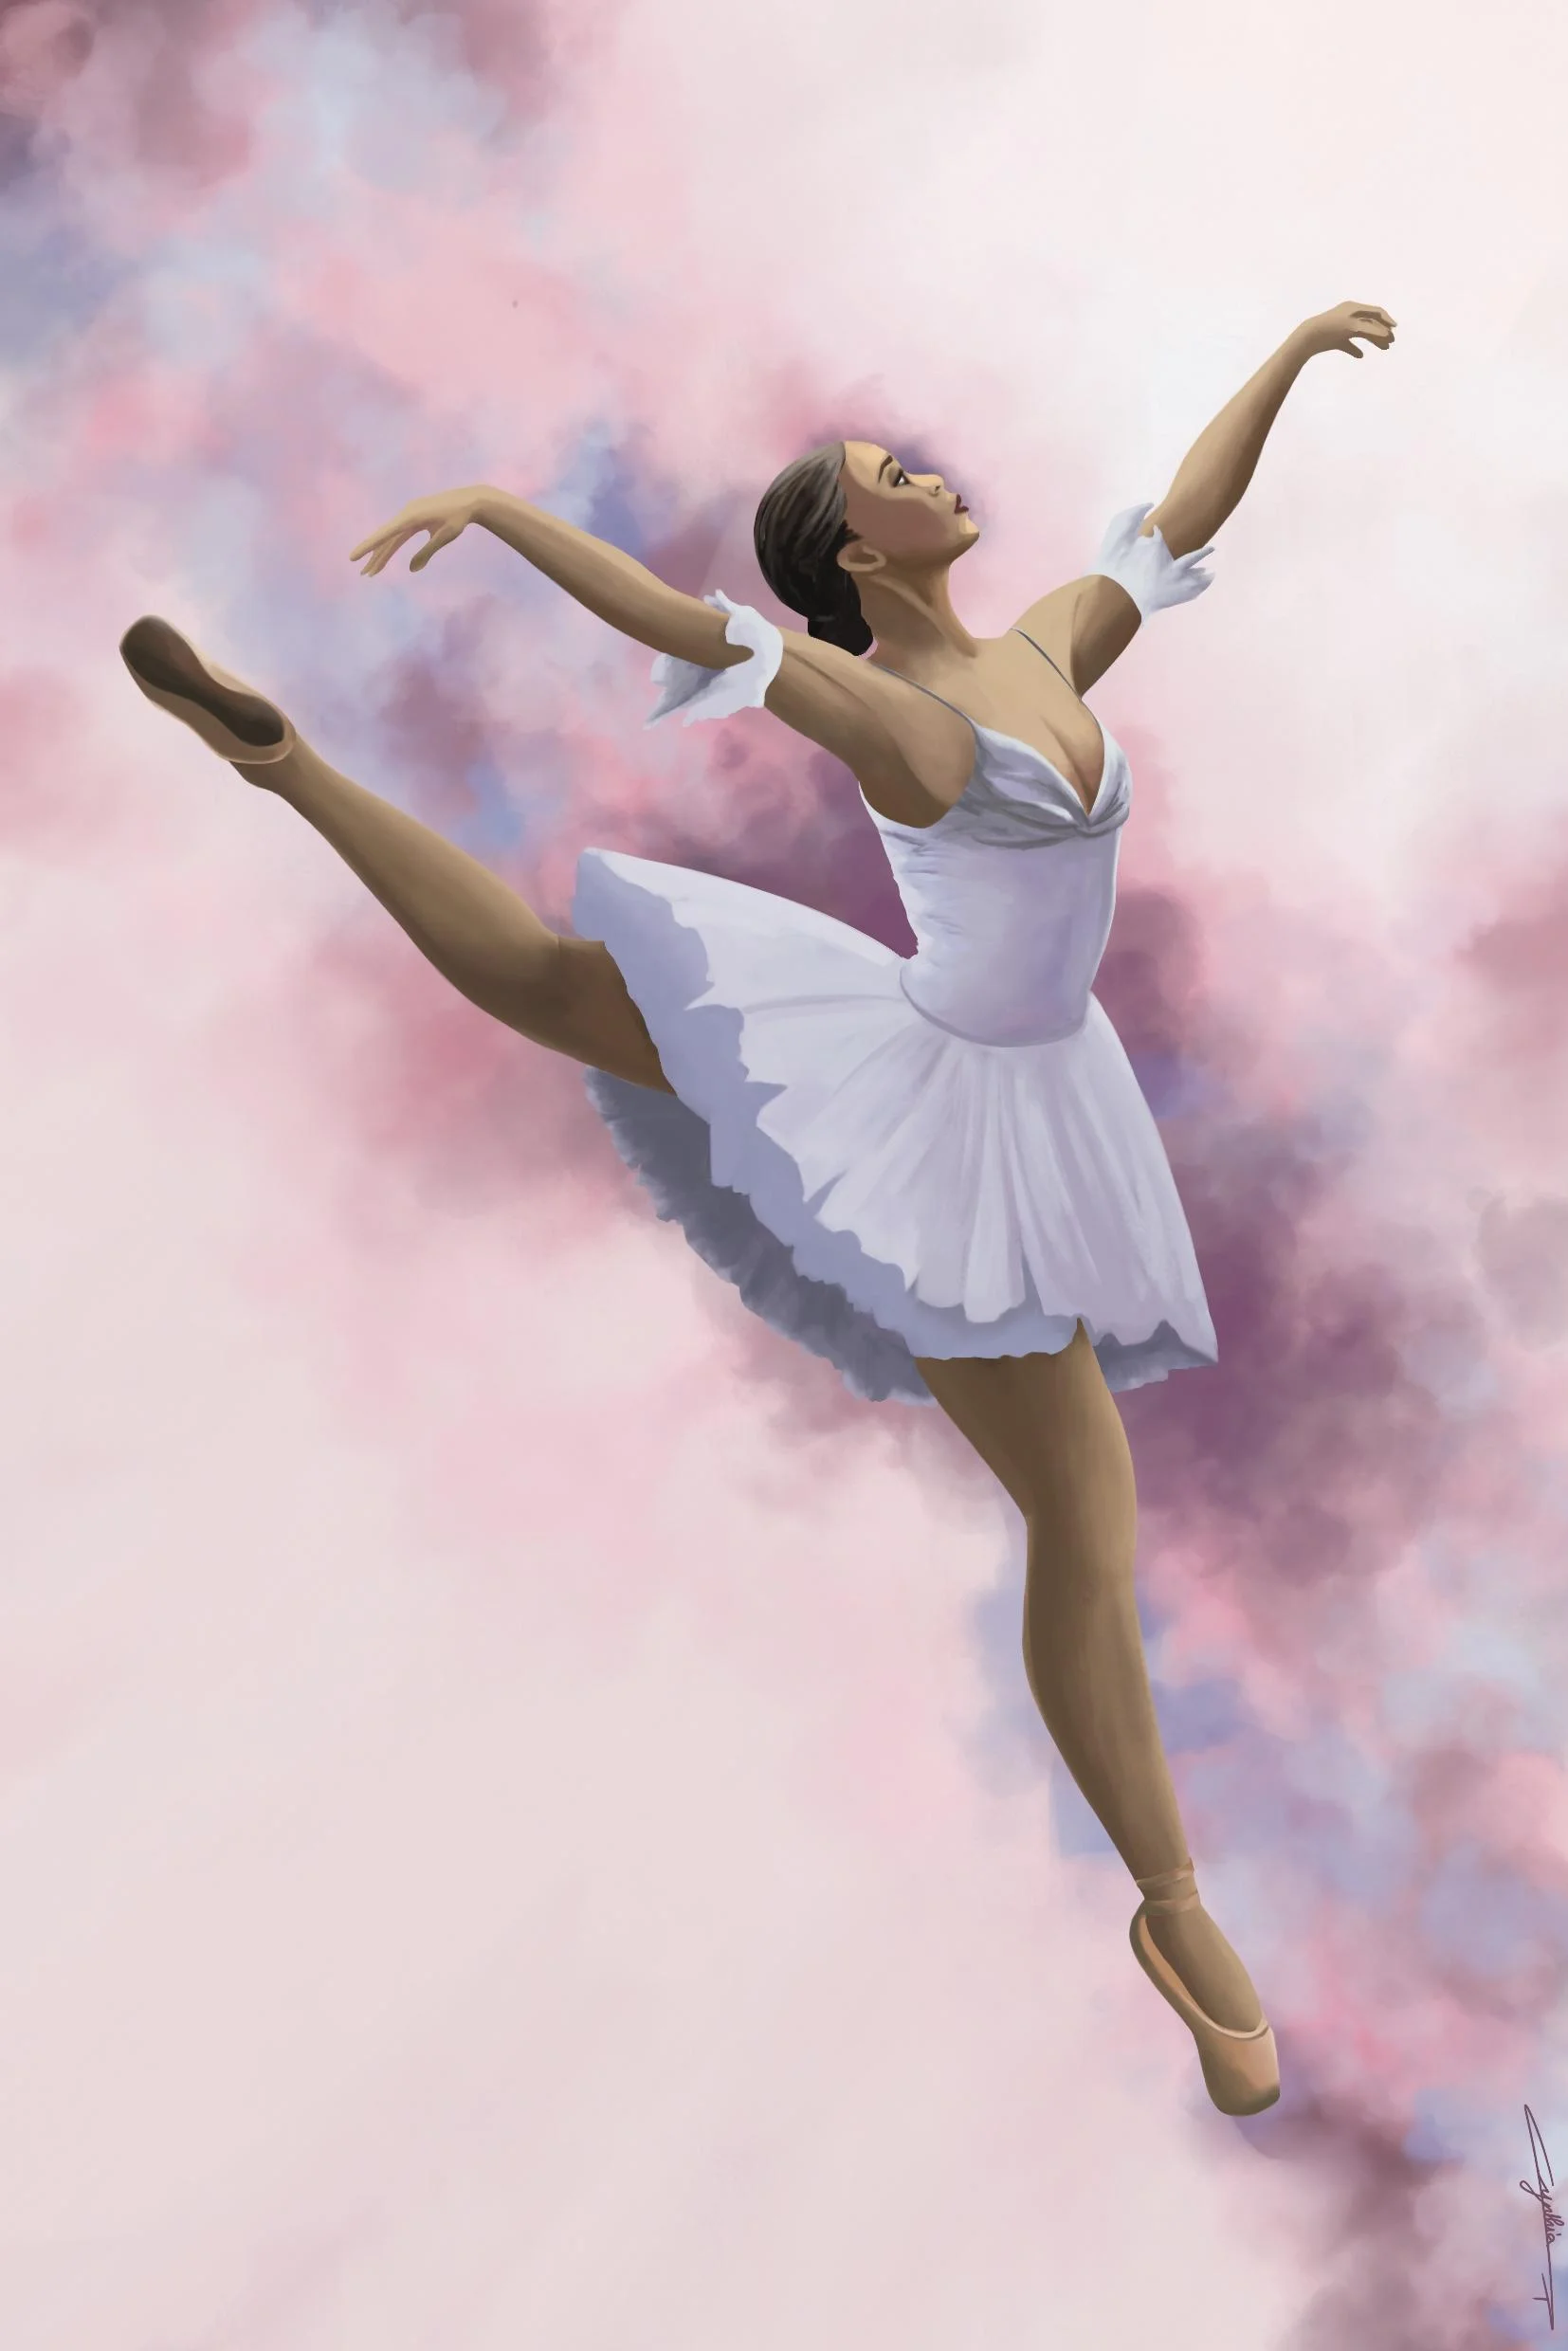 Danseuse étoile illustration par Cynthia Artstudio